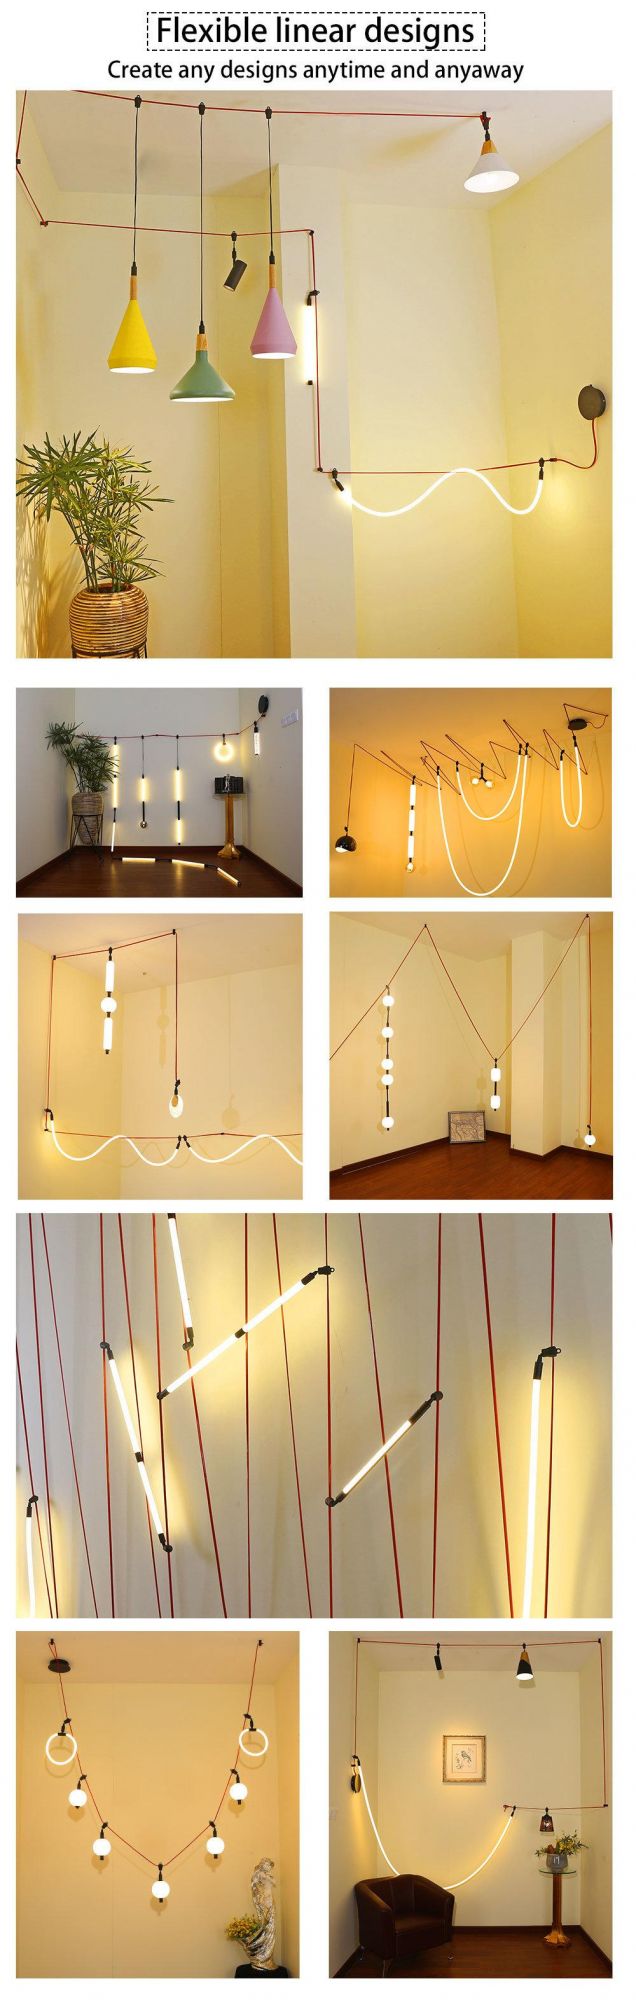 LED Indoor Designer Flexible Linear Lighting 3000K/6000K Glass Acrylic Shade Decoration Chandelier Pendant Ceiling Spot Track Lamp Light